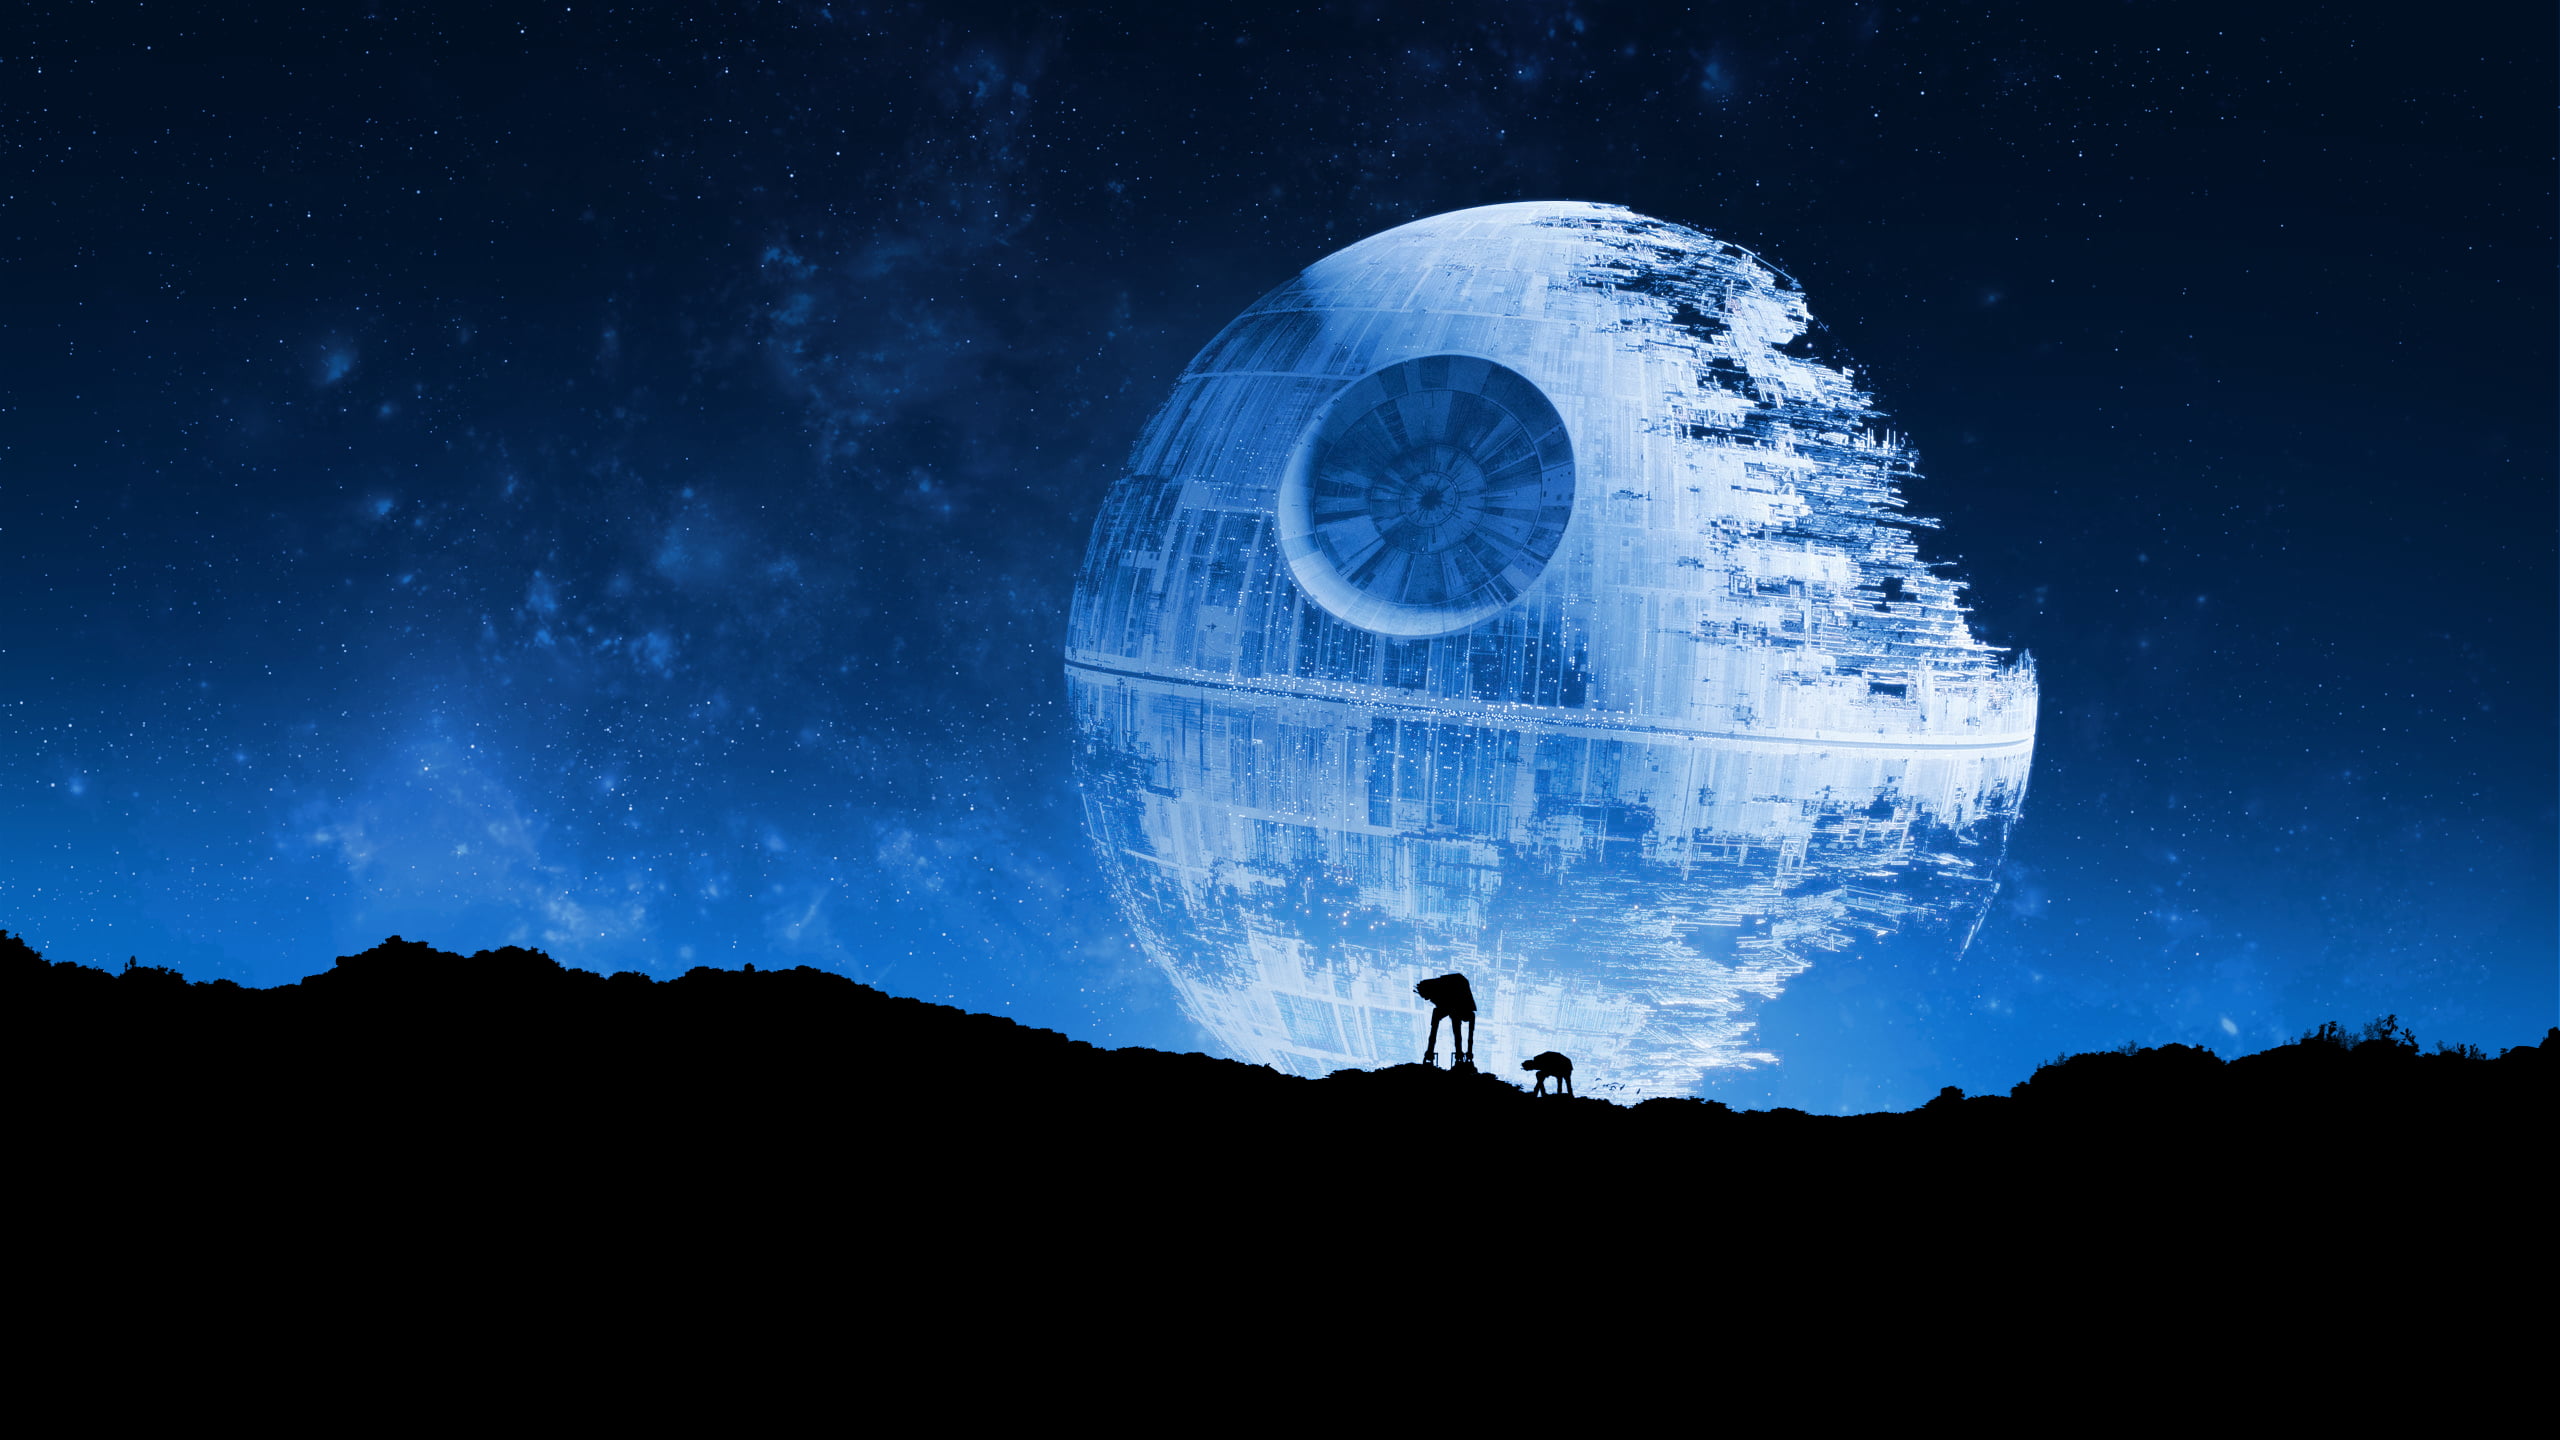 Star Wars Star Destroyer wallpaper, Death Star, AT-AT, space